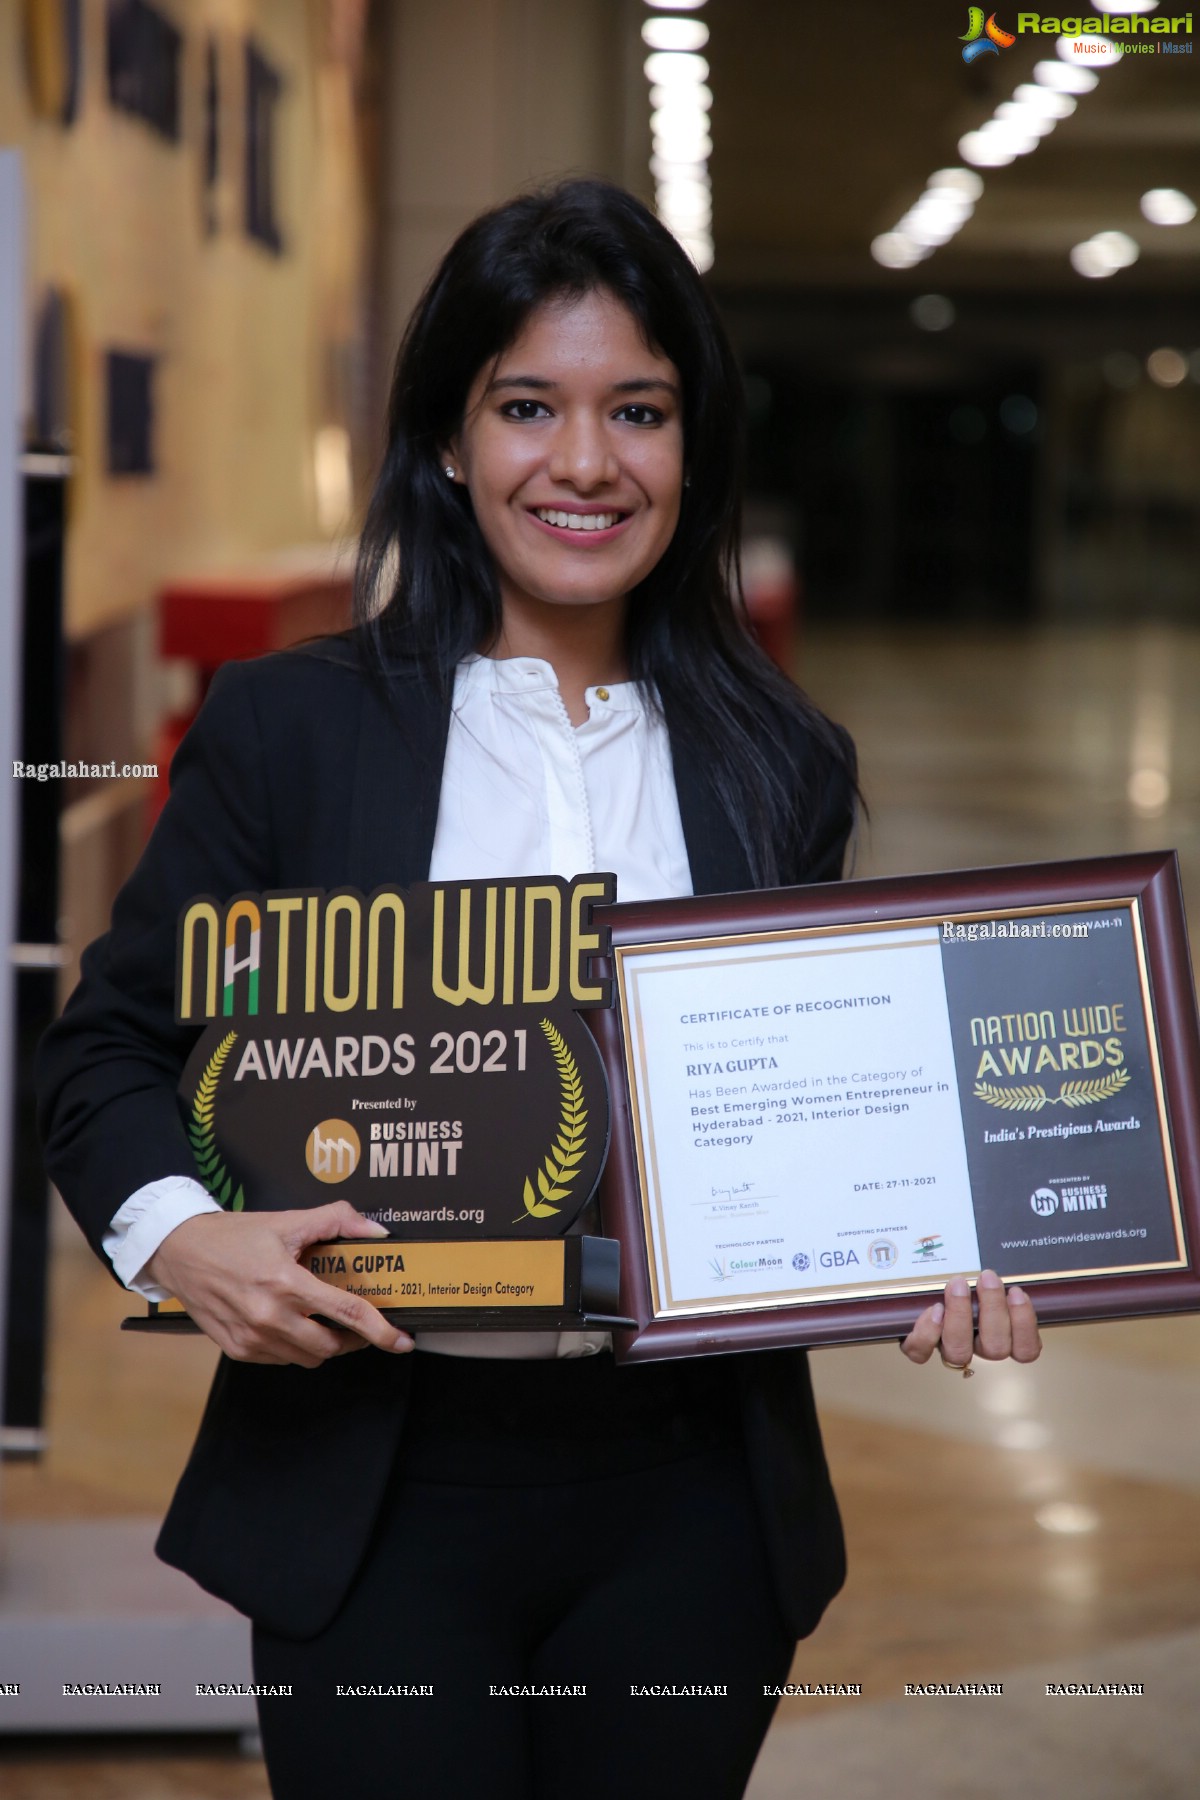 Business Mint Nation Wide Awards 2021